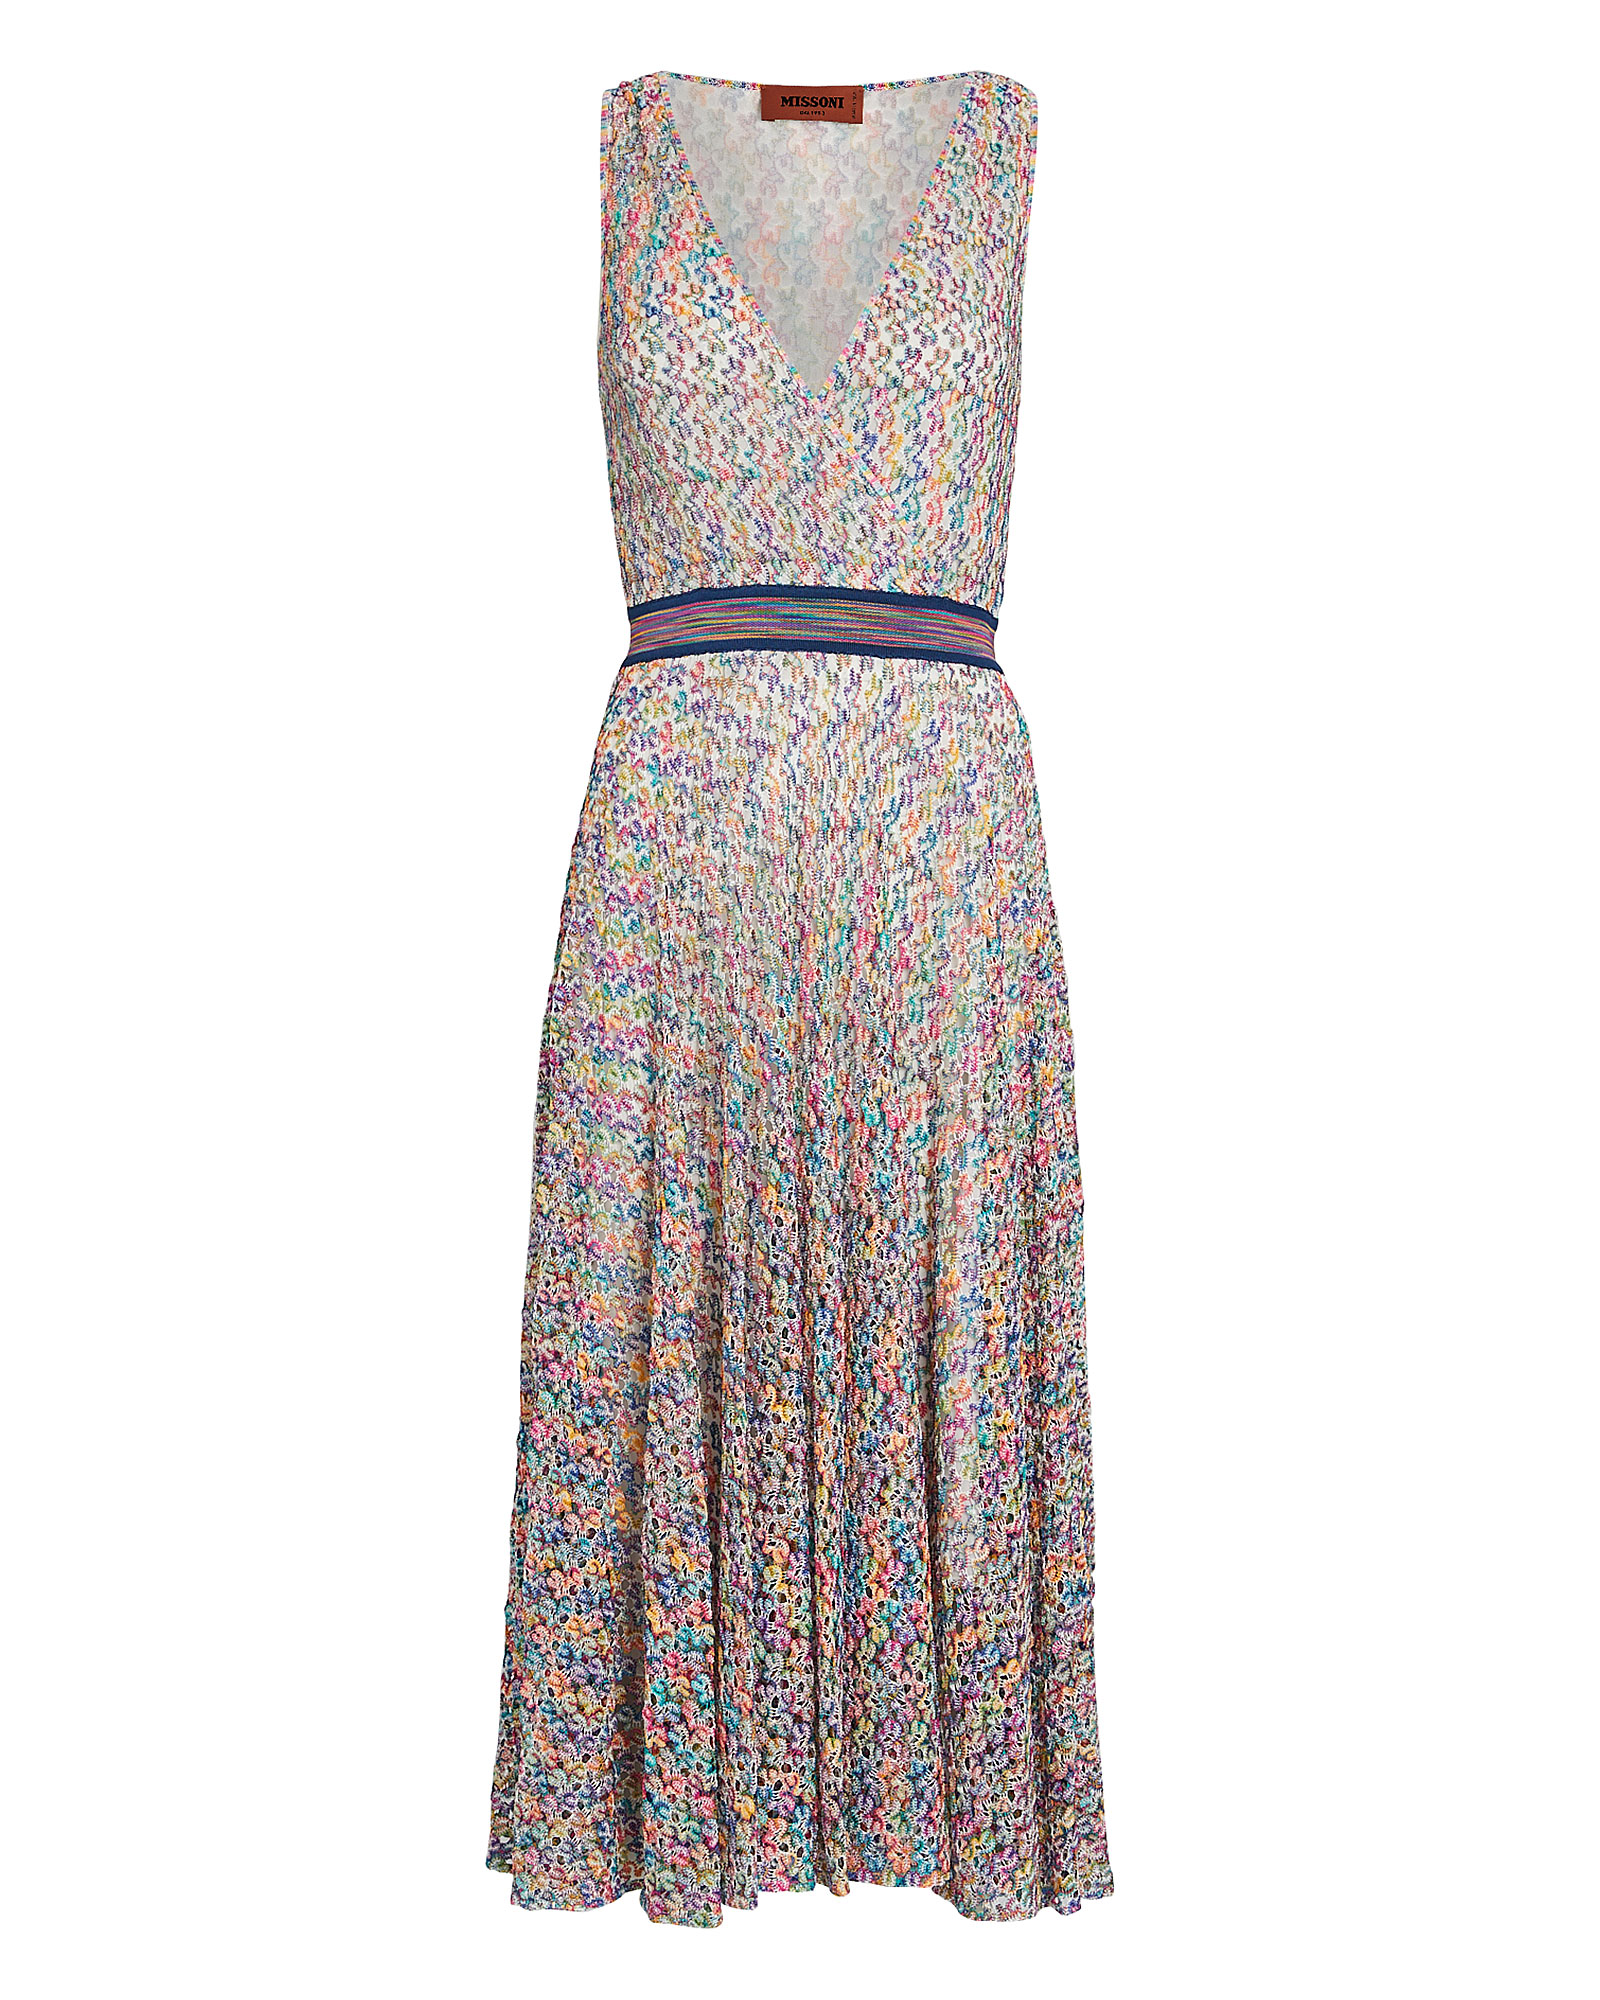 MISSONI Rainbow Knit Faux-Wrap Dress,060049205026